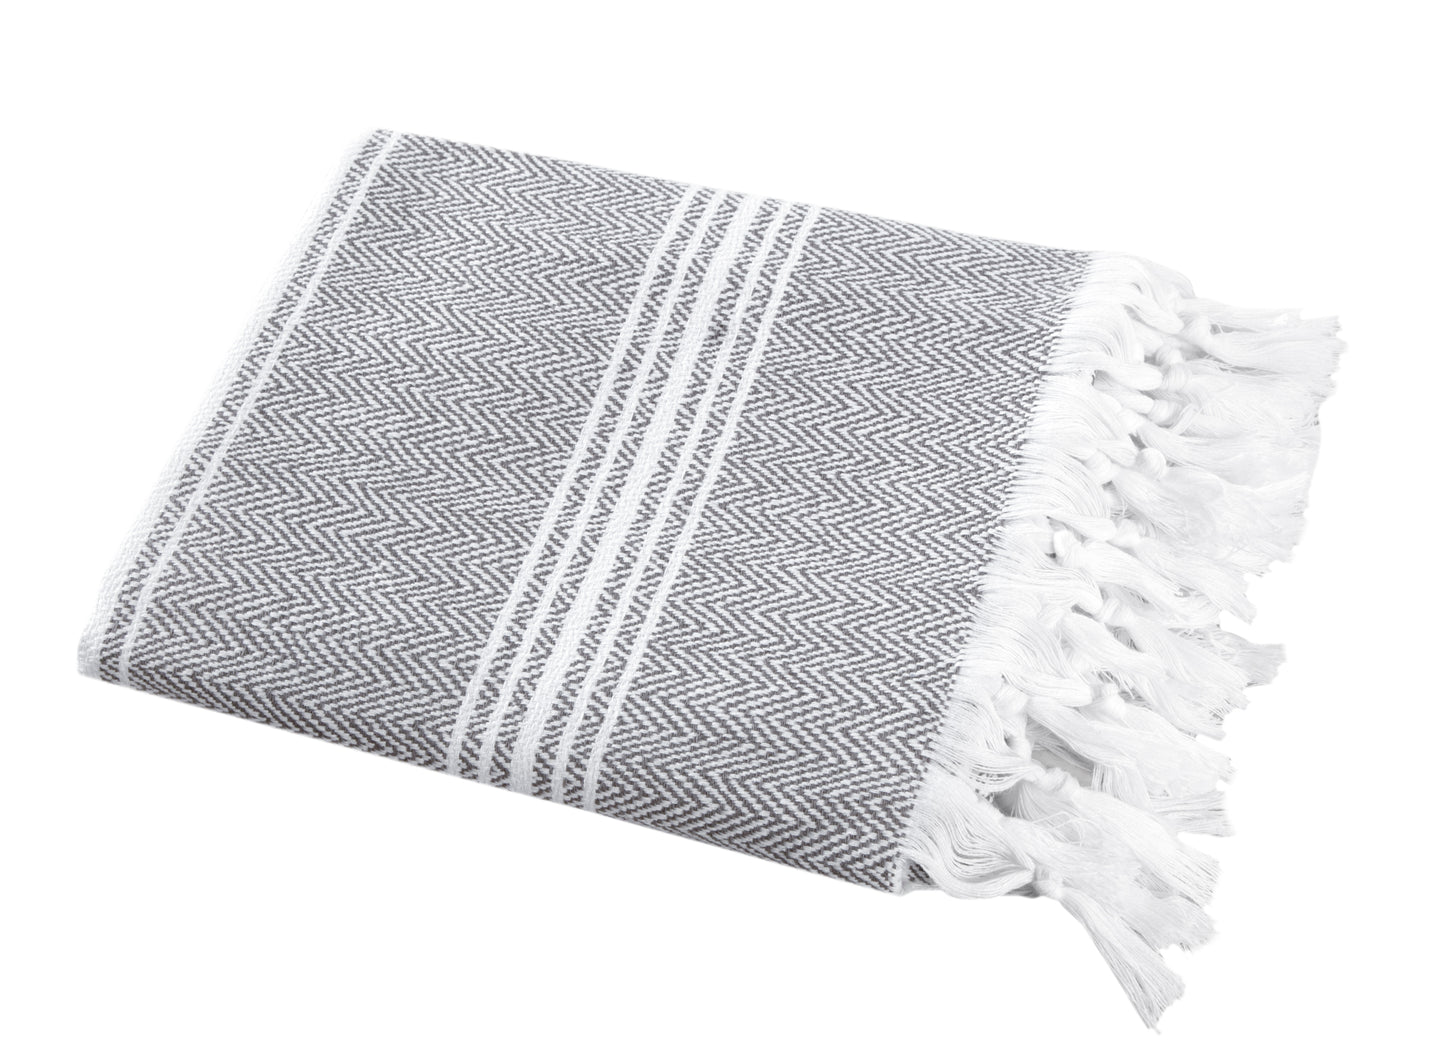 Luxury Thick Peshtemal Turkish Cotton Bath Sheet Towel - 40 X 70 - Hand Knotted - Classic Turkish Towels